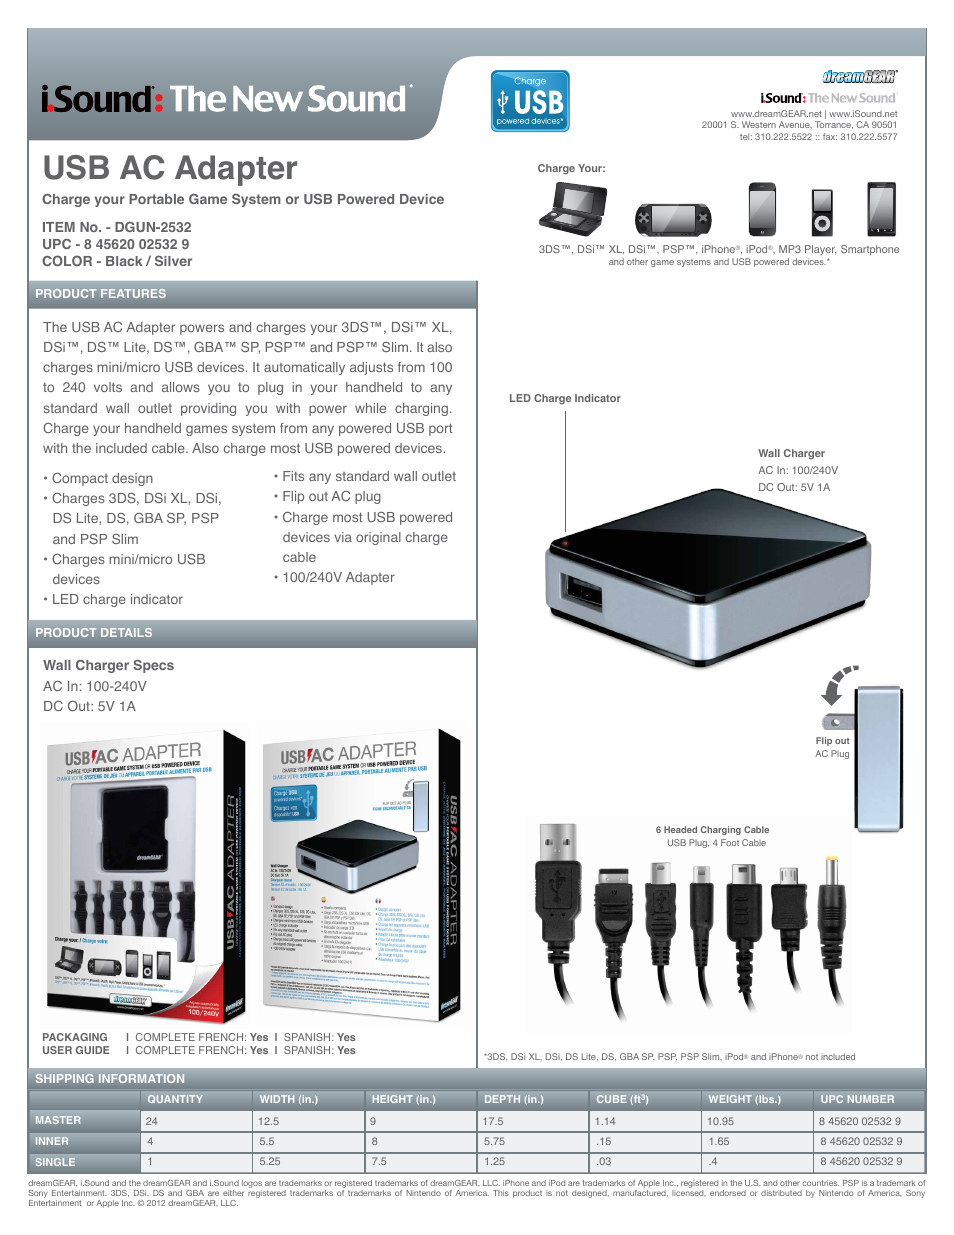 USB AC Adapter - Sell Sheet